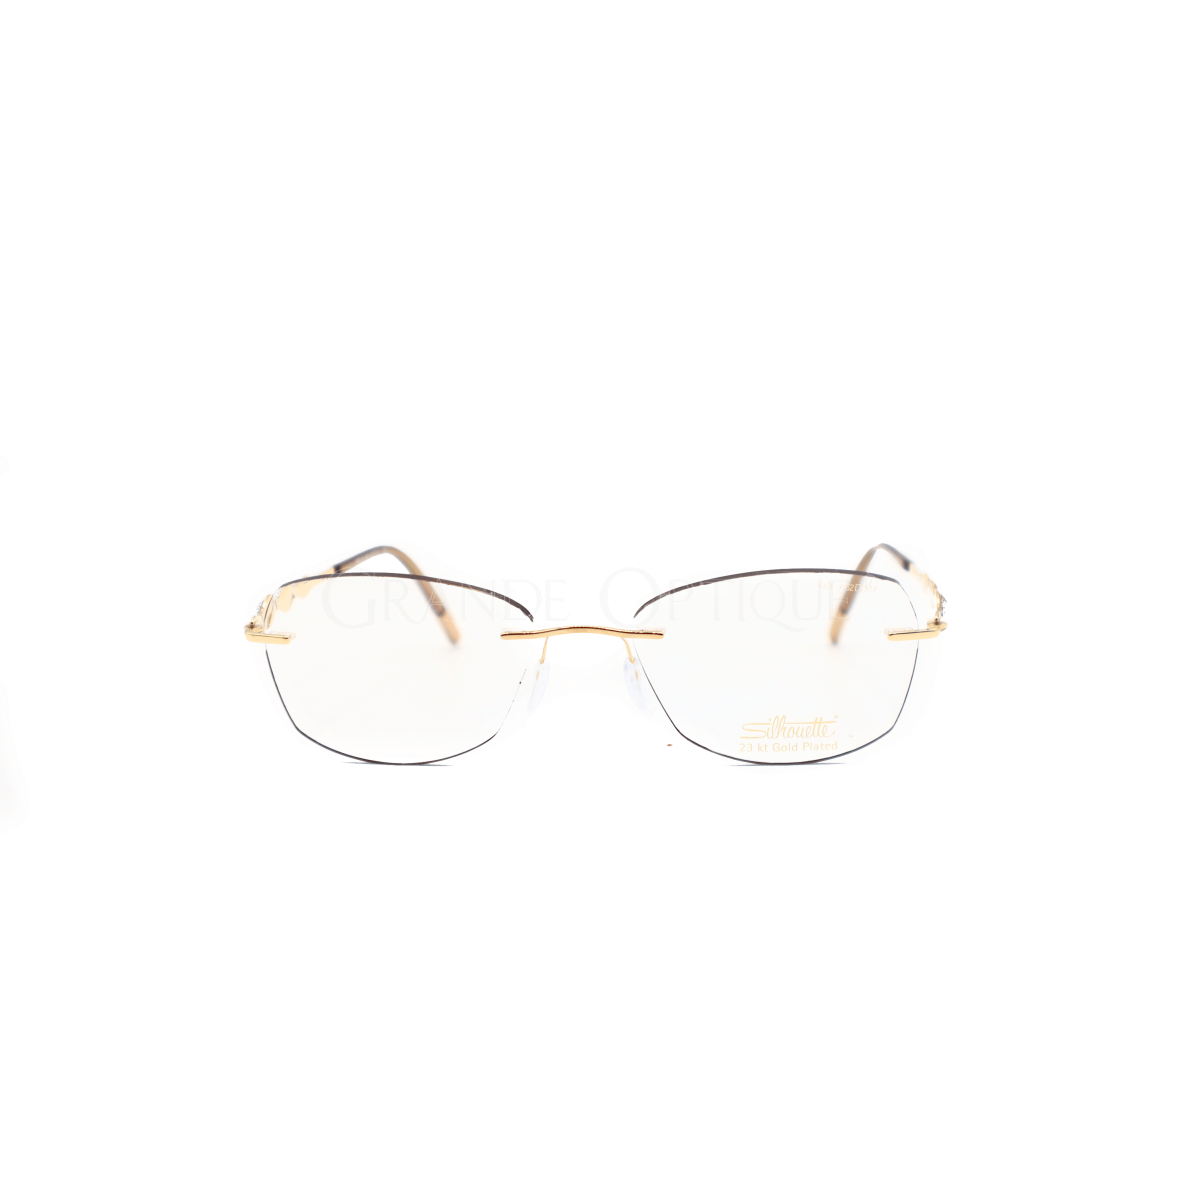 Rame de ochelari Silhouette 4376 20 6051 placate cu Aur 23k